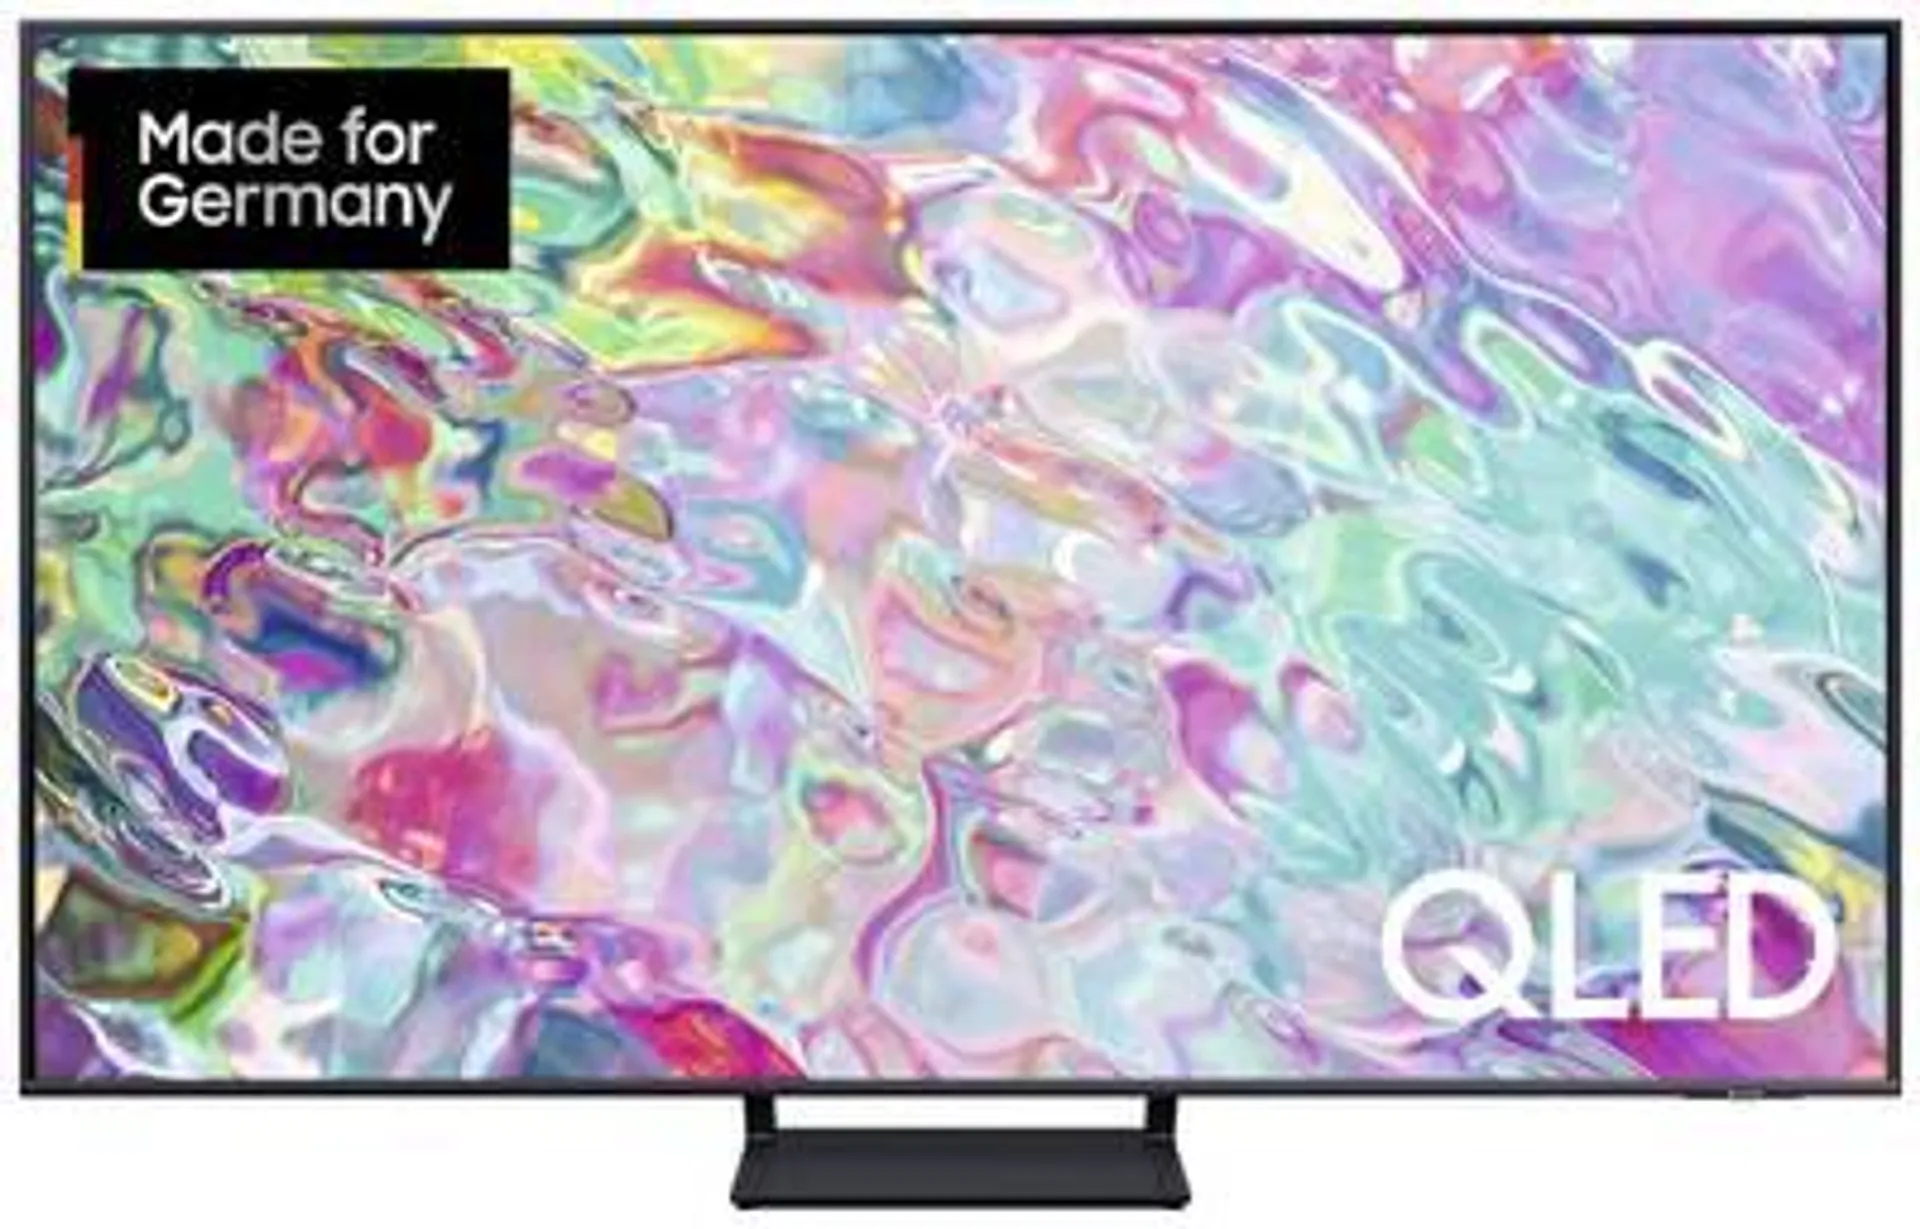 Samsung GQ65Q70B QLED TV 163 cm 65 inch EEC F (A - G) DVB-T2, DVB-C, DVB-S, UHD, Smart TV, Wi-Fi, PVR ready, CI+ Black